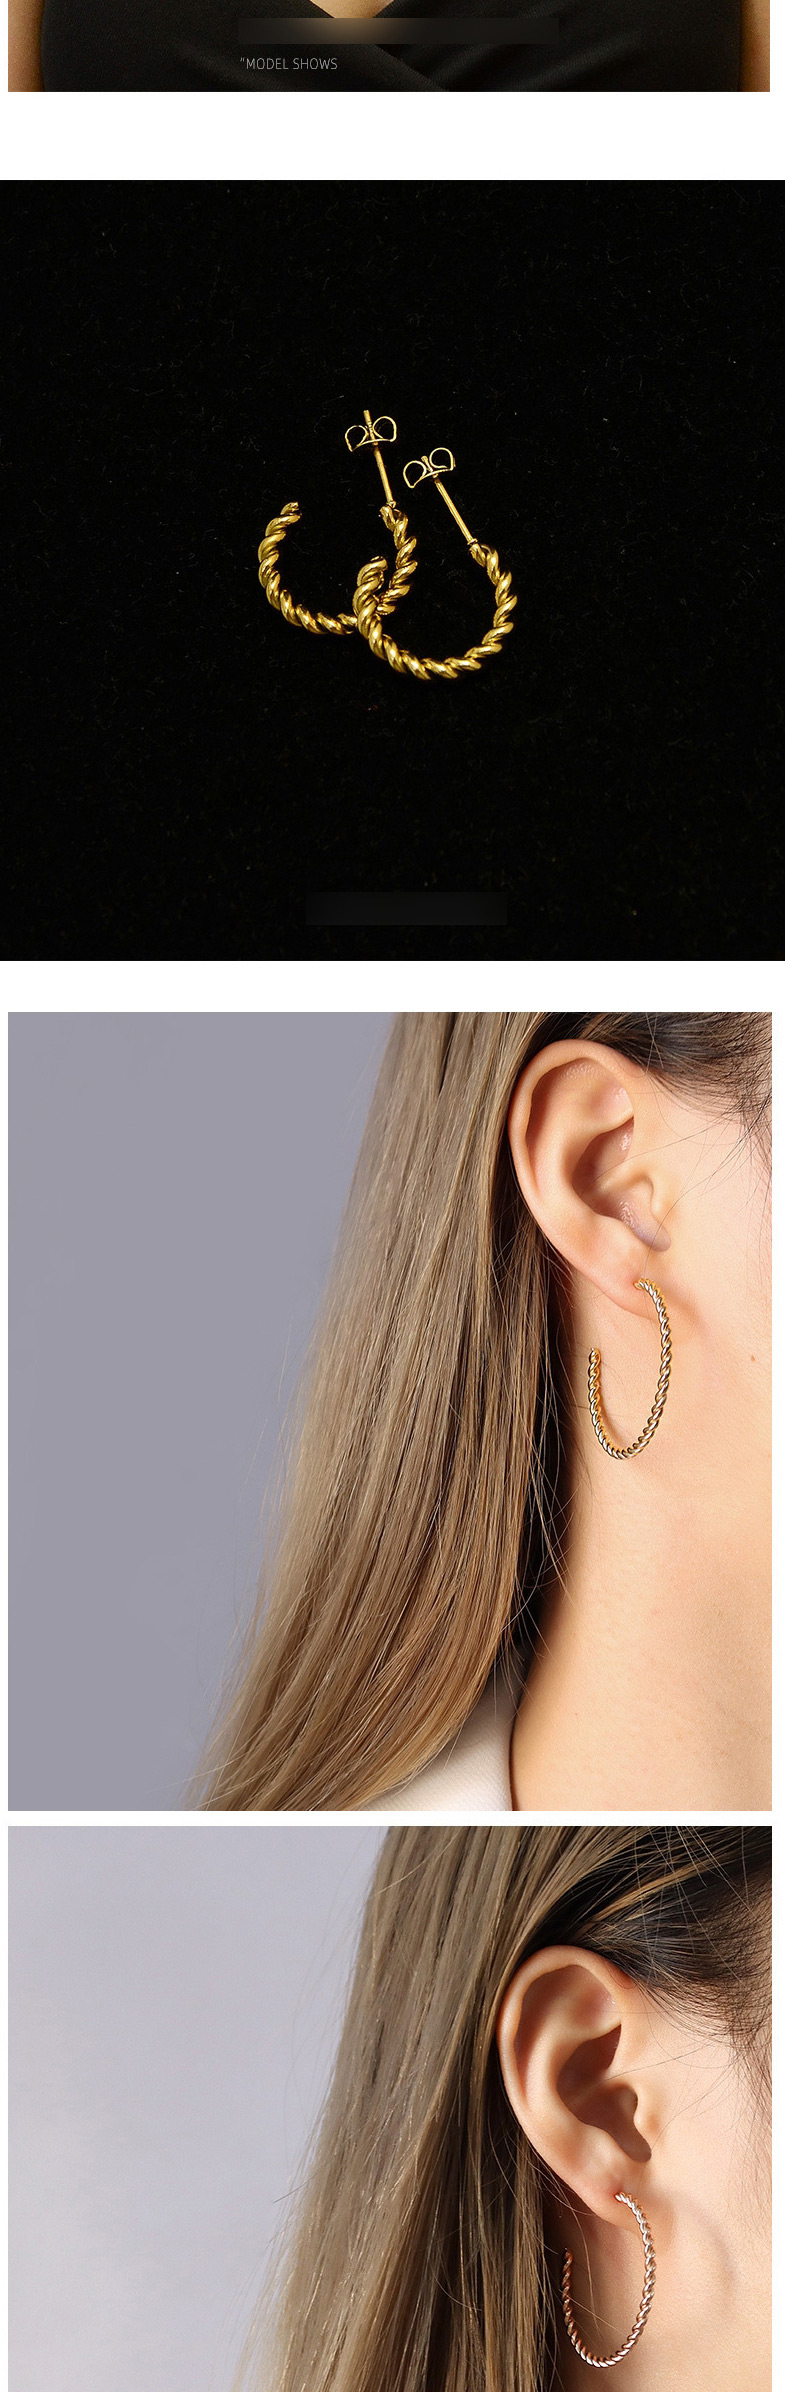 Fashion Pair Of Small Gold Color Earrings Titanium Steel Twist C-shaped Earrings,Earrings